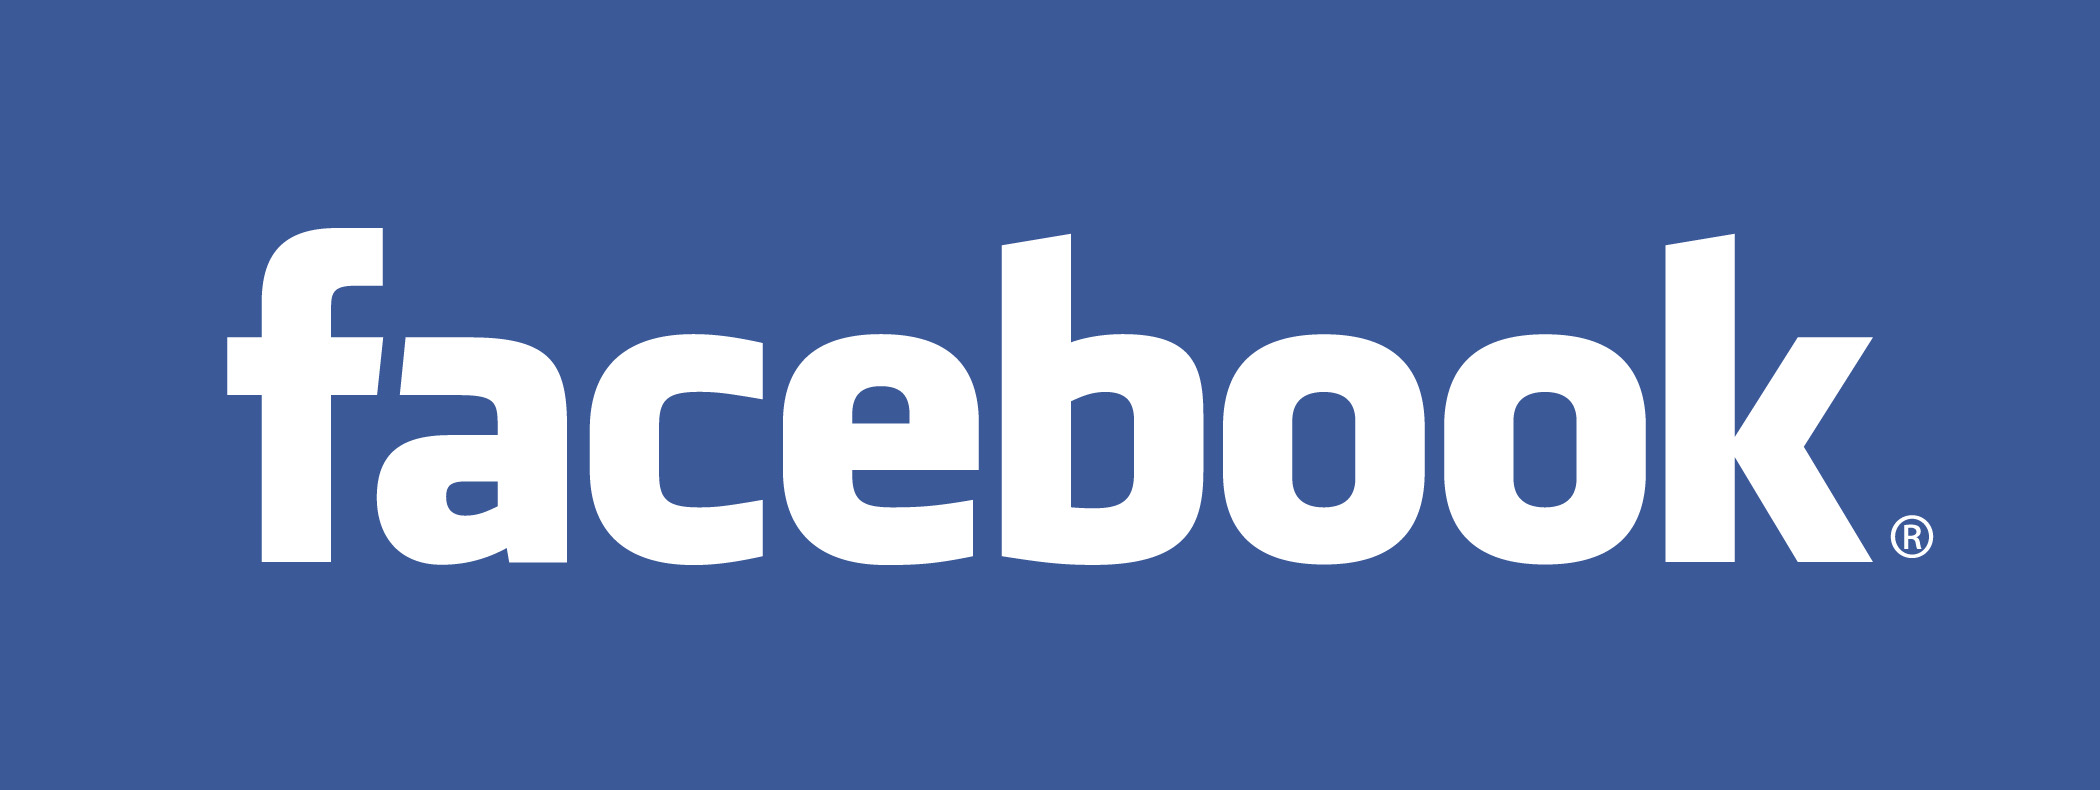 facebook_logo.jpg (2100×790)